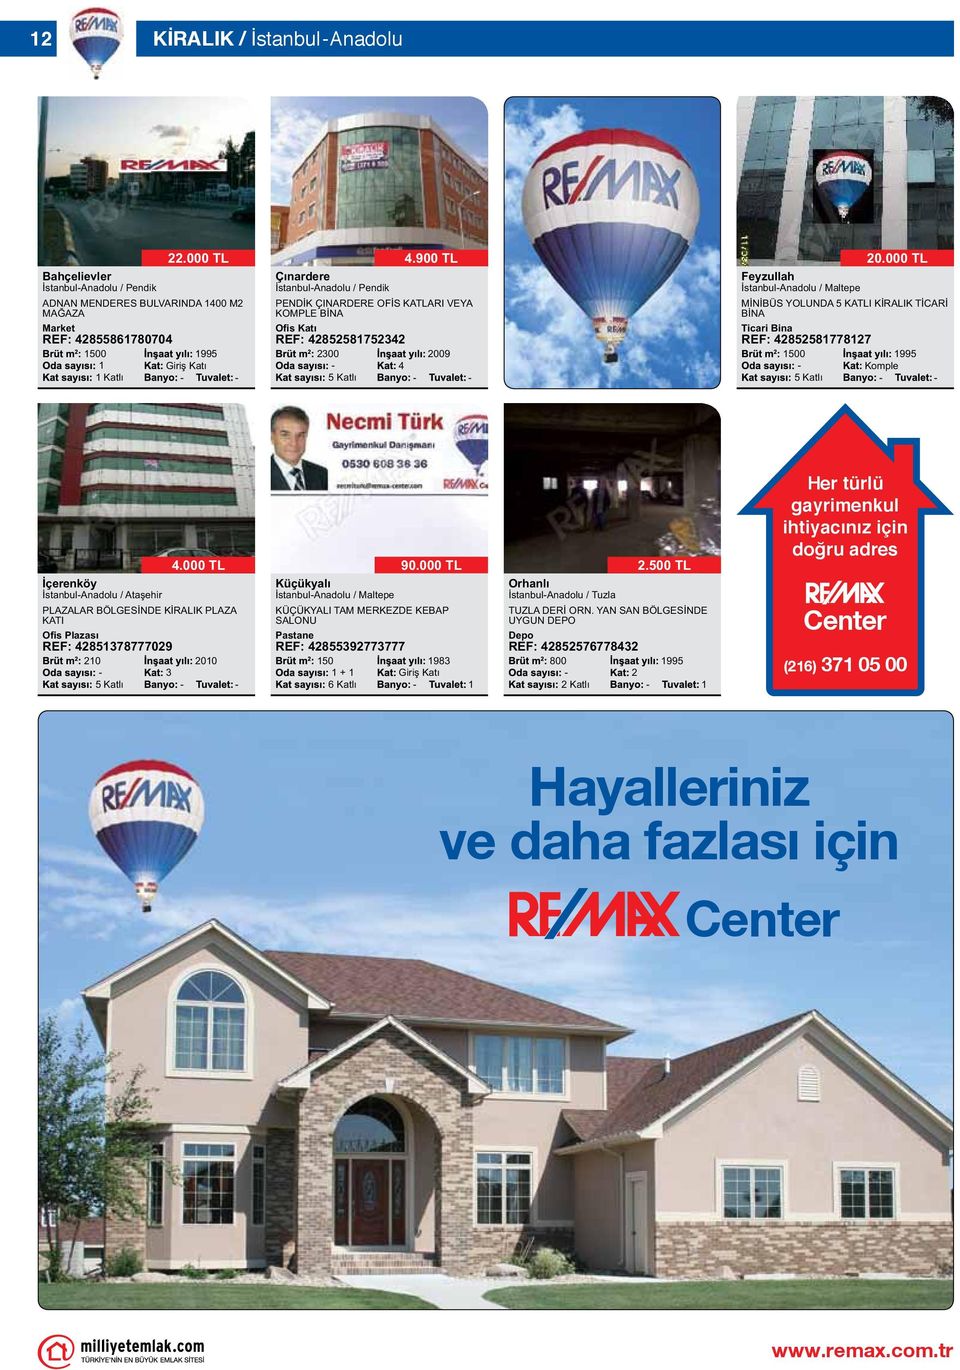 48558754 00 4 4.900 TL Feyzullah İstanbulAnadolu / Maltepe 0.